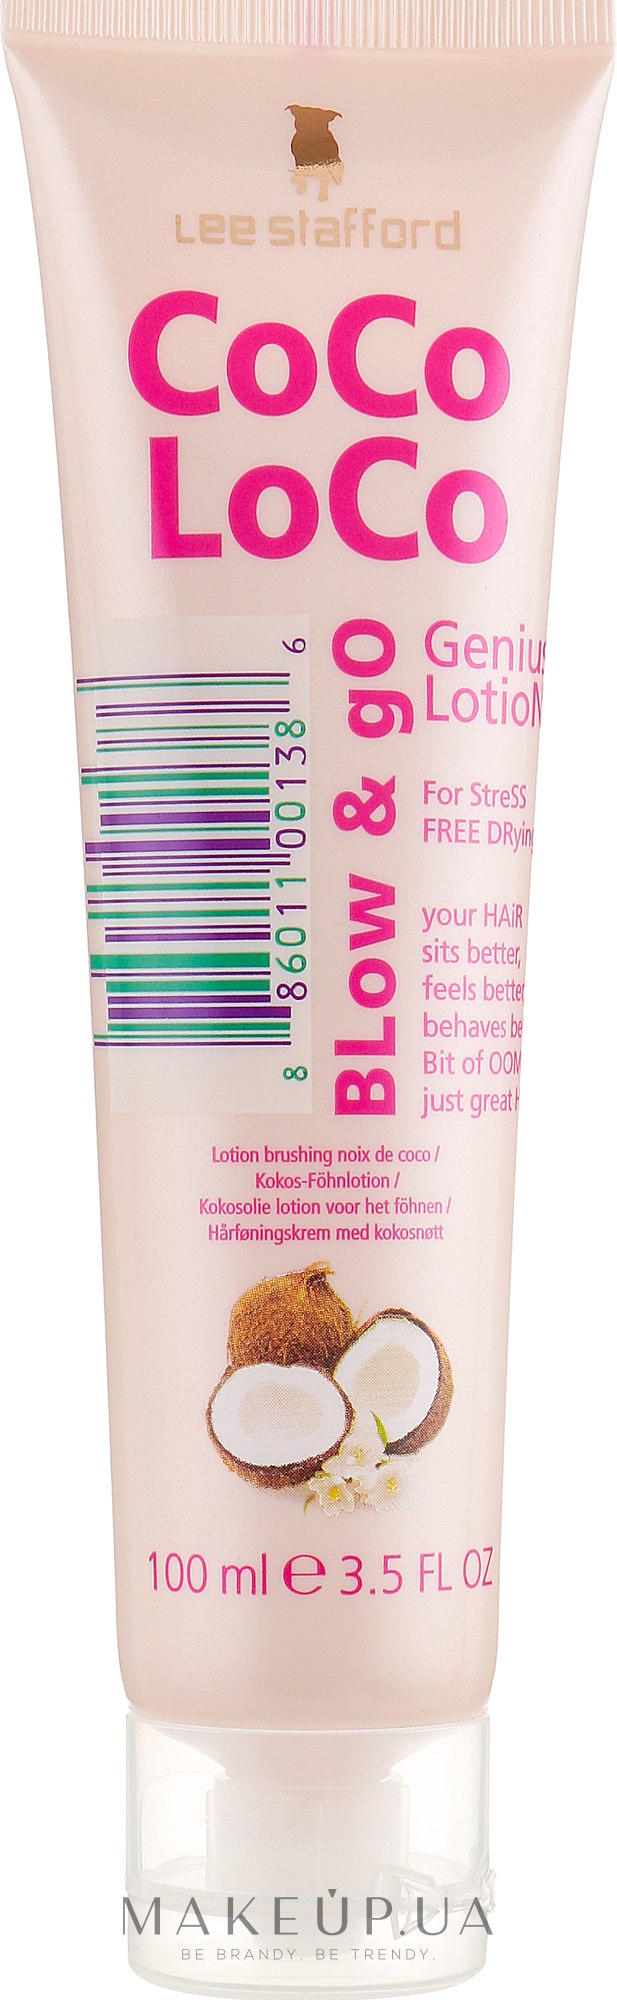 Засіб для укладання волосся - Lee Stafford Coco Loco Blow&Go Genius Lotion — фото 100ml